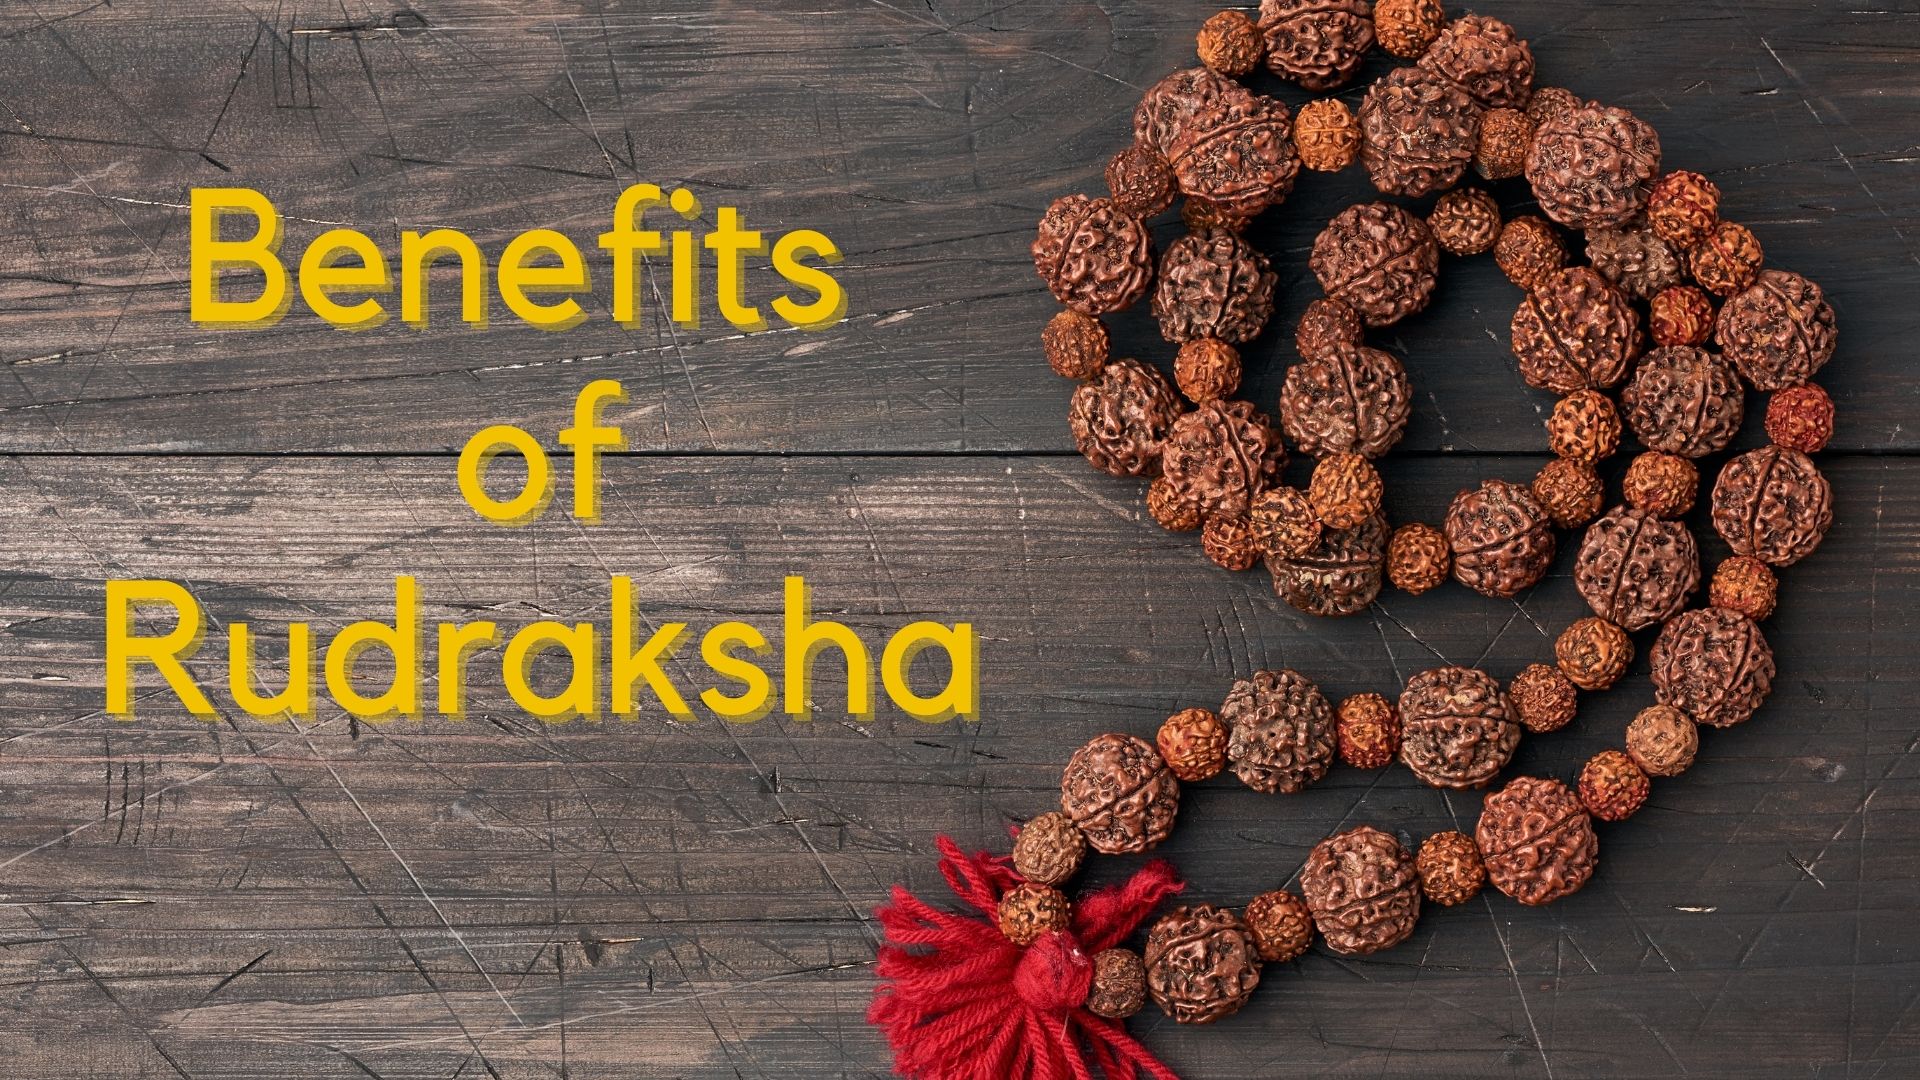 Benefits of Rudraksha